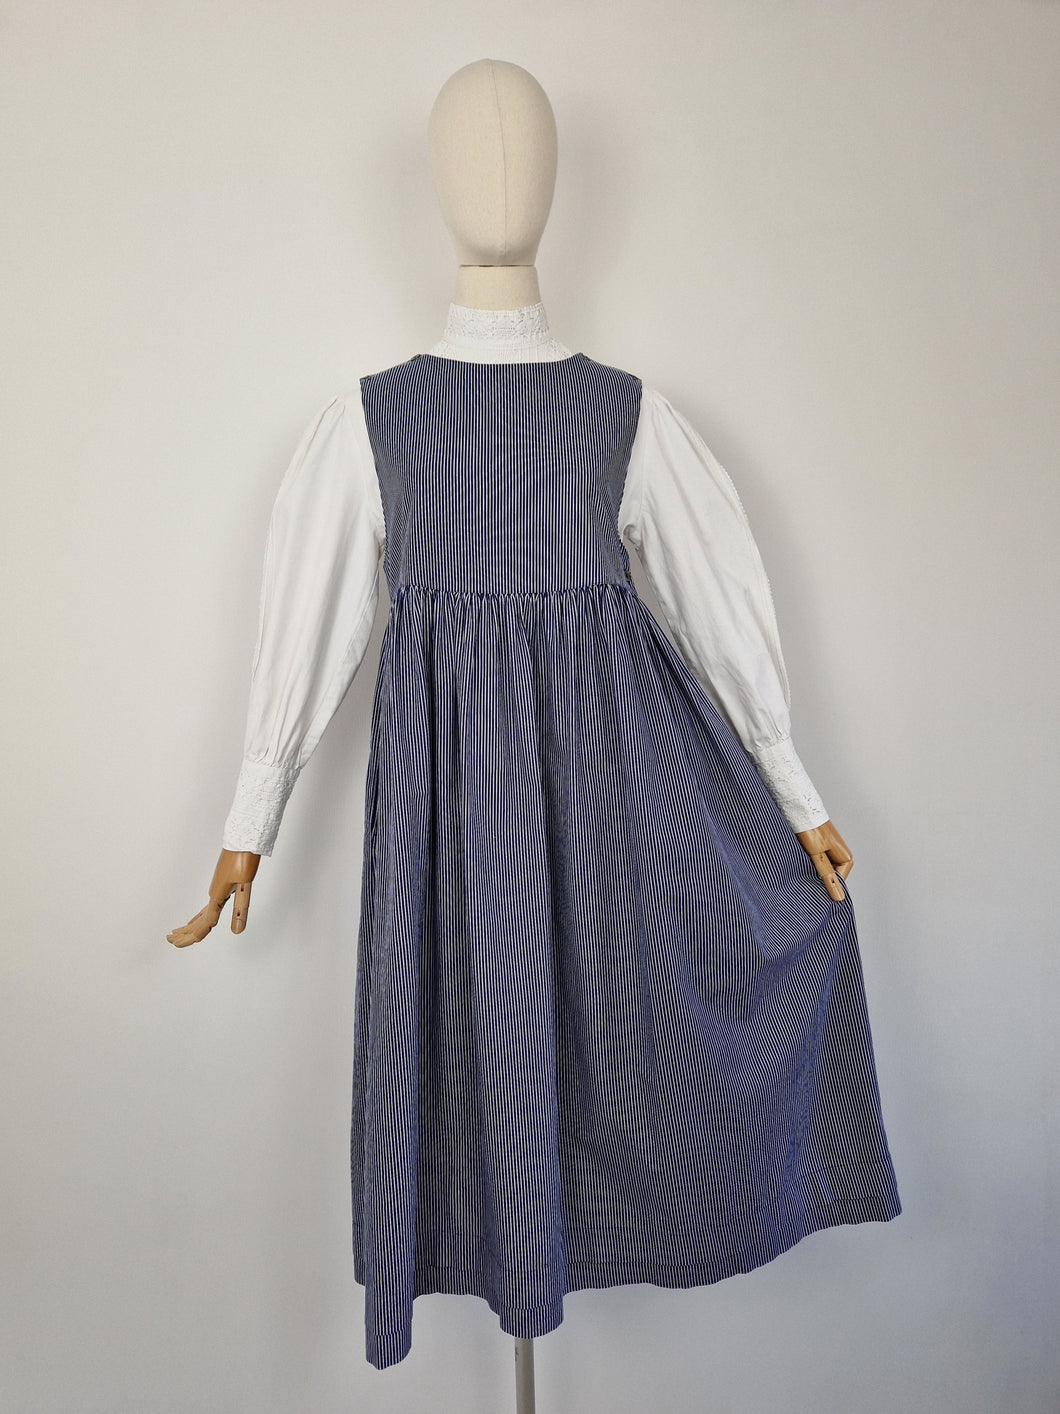 Vintage 80s Laura Ashley pinafore dress